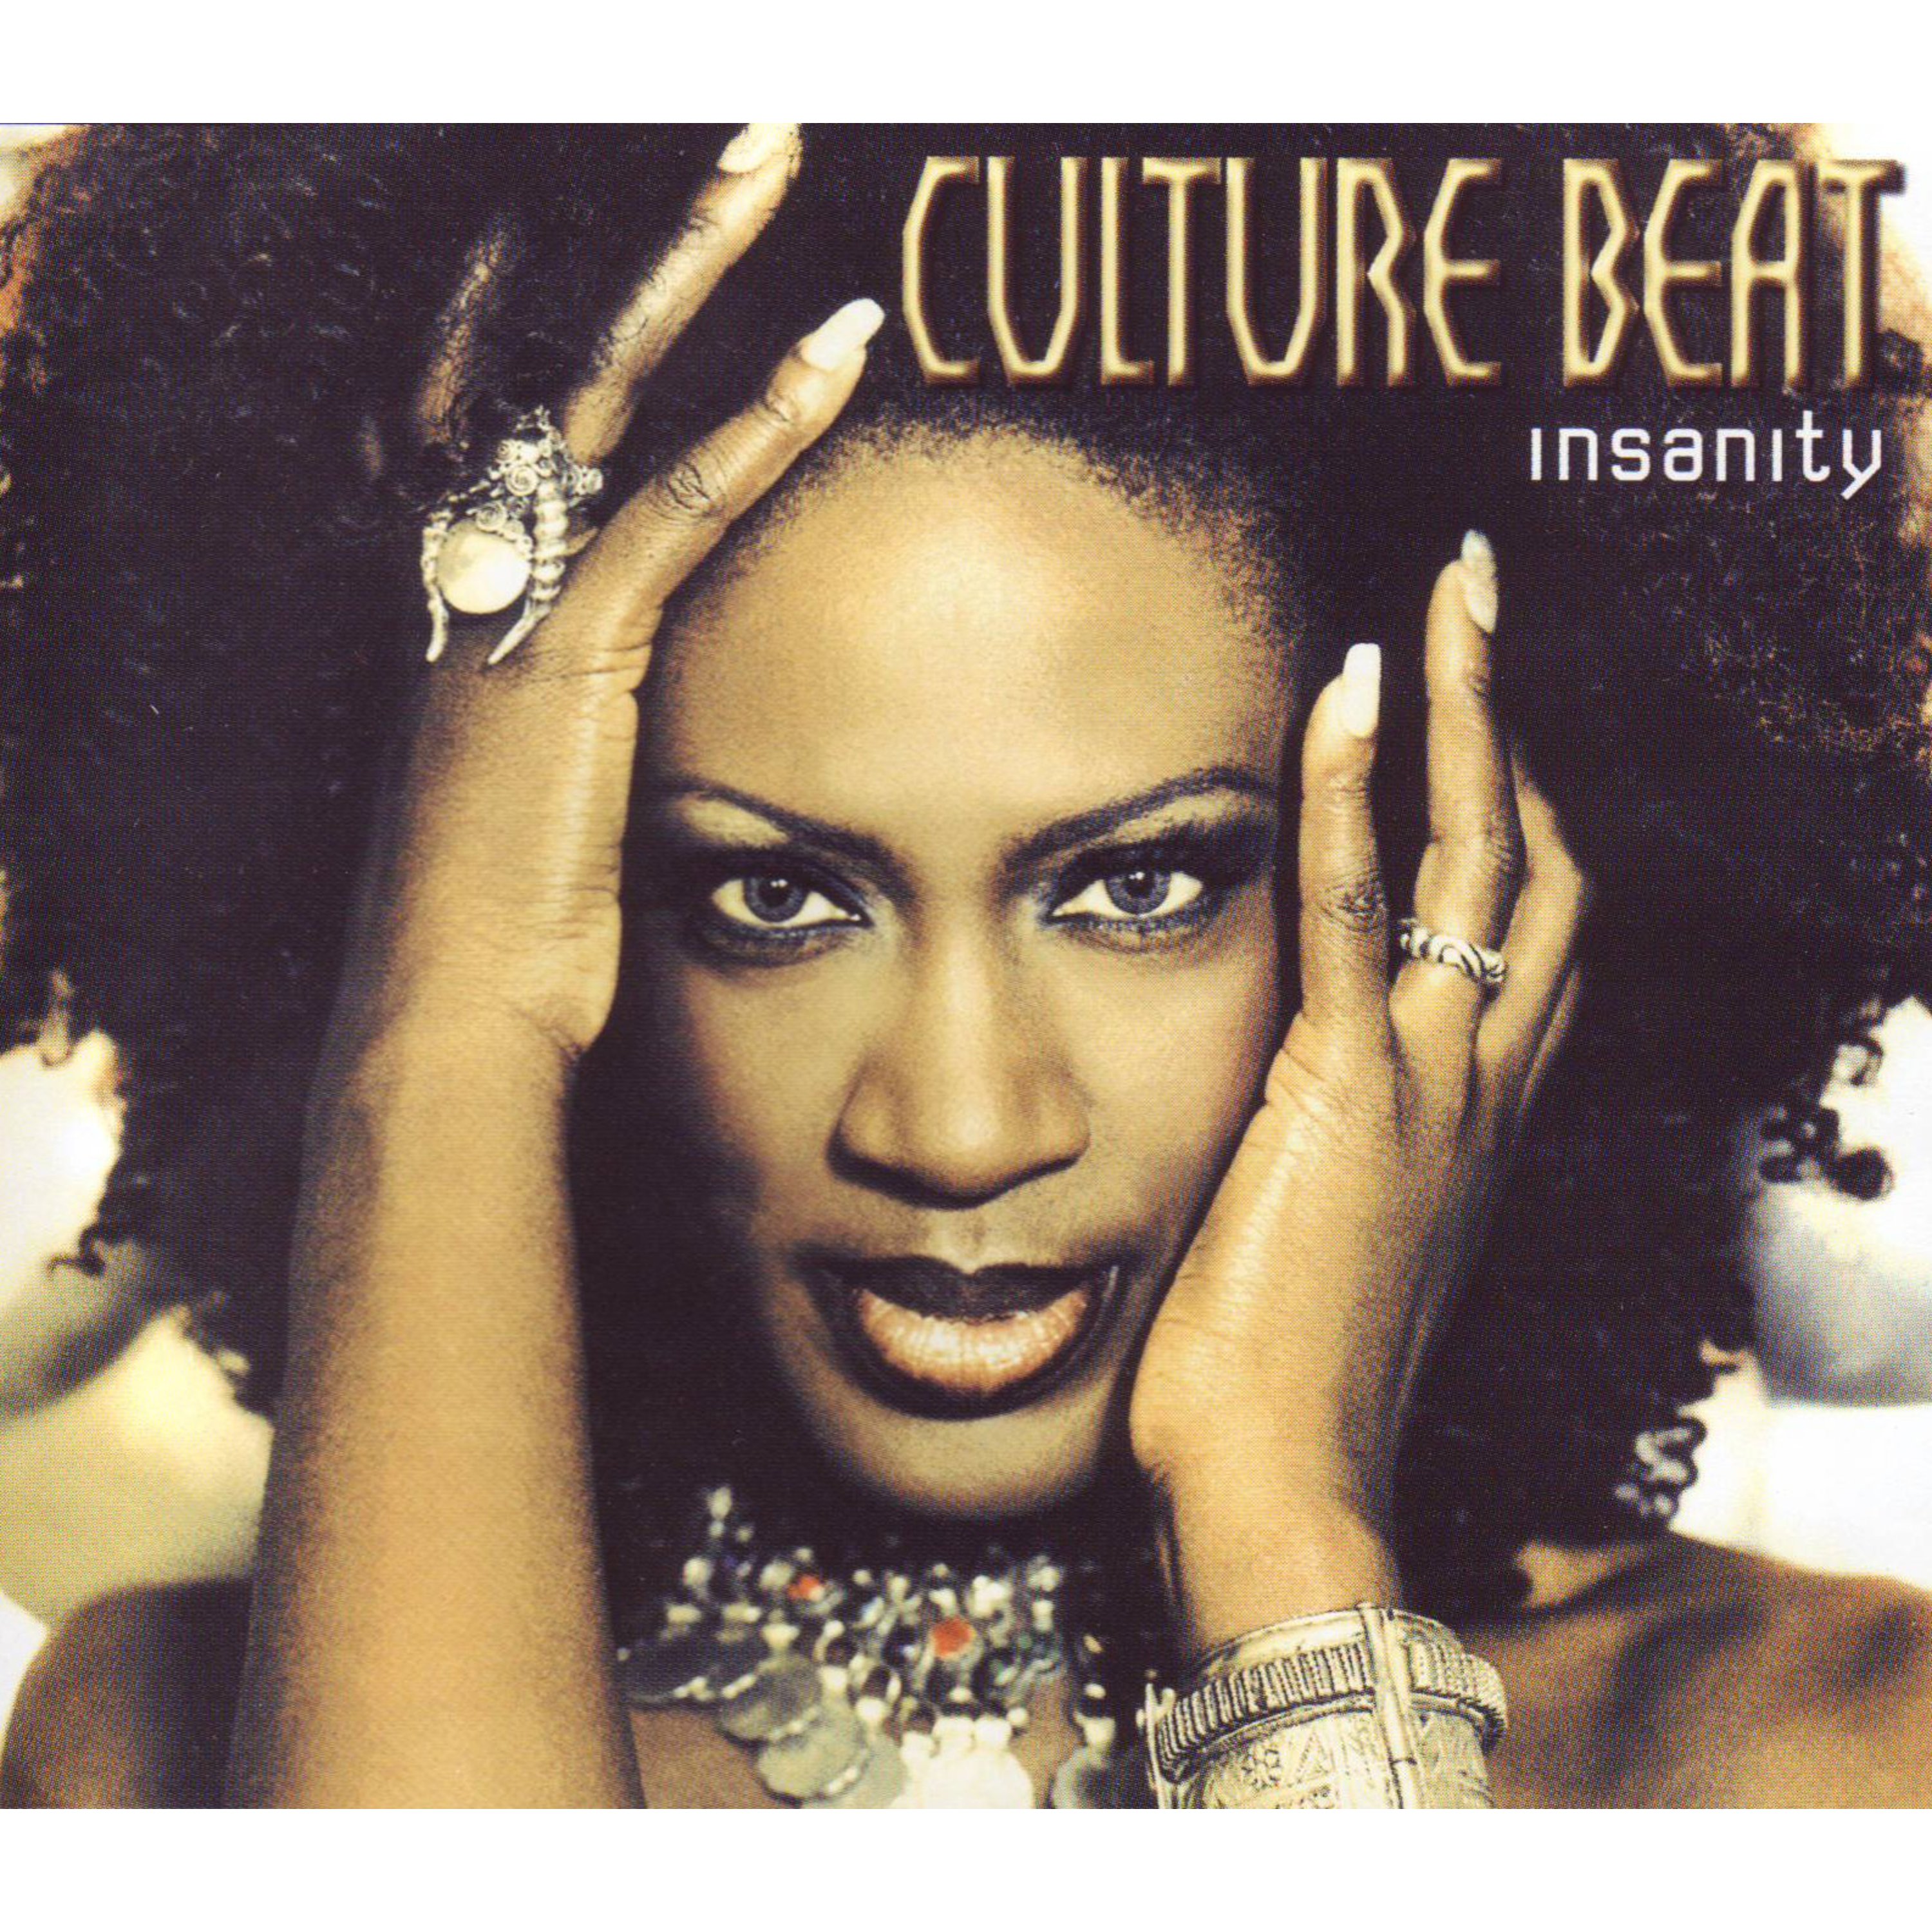 Insanity (Culture Beat Club Remix)